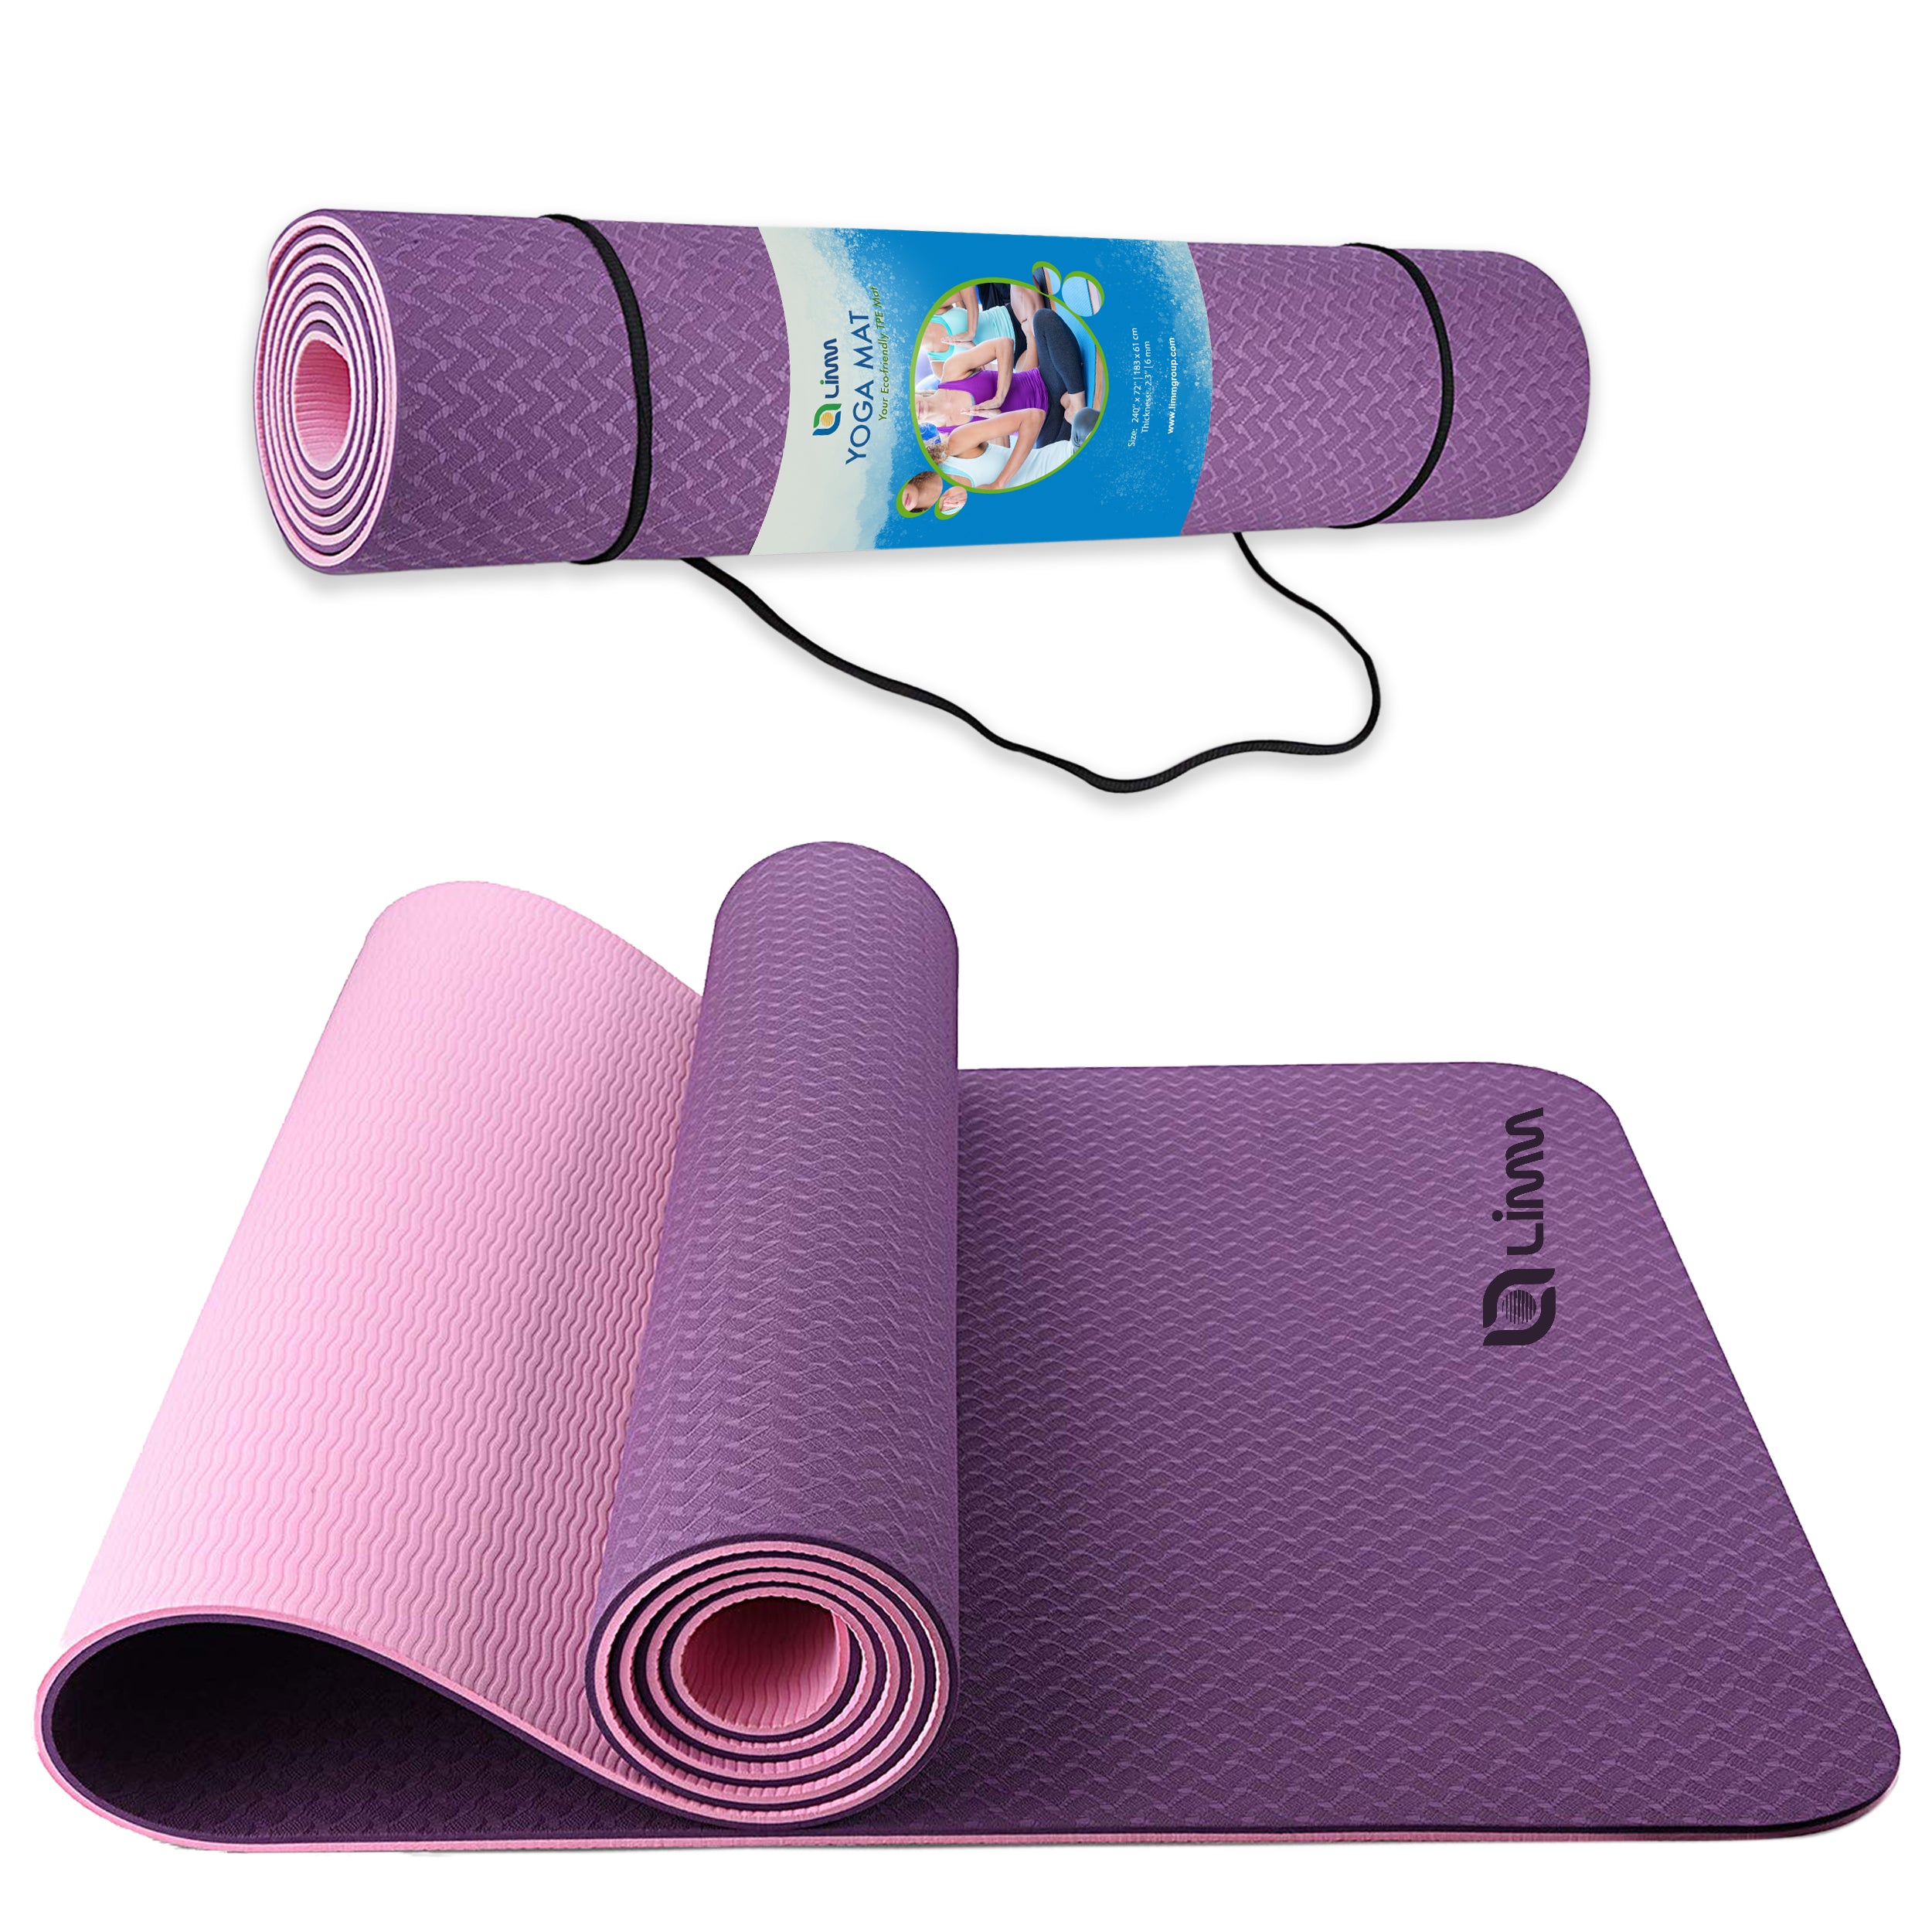 Hinge Health Purple Yoga Mat - New